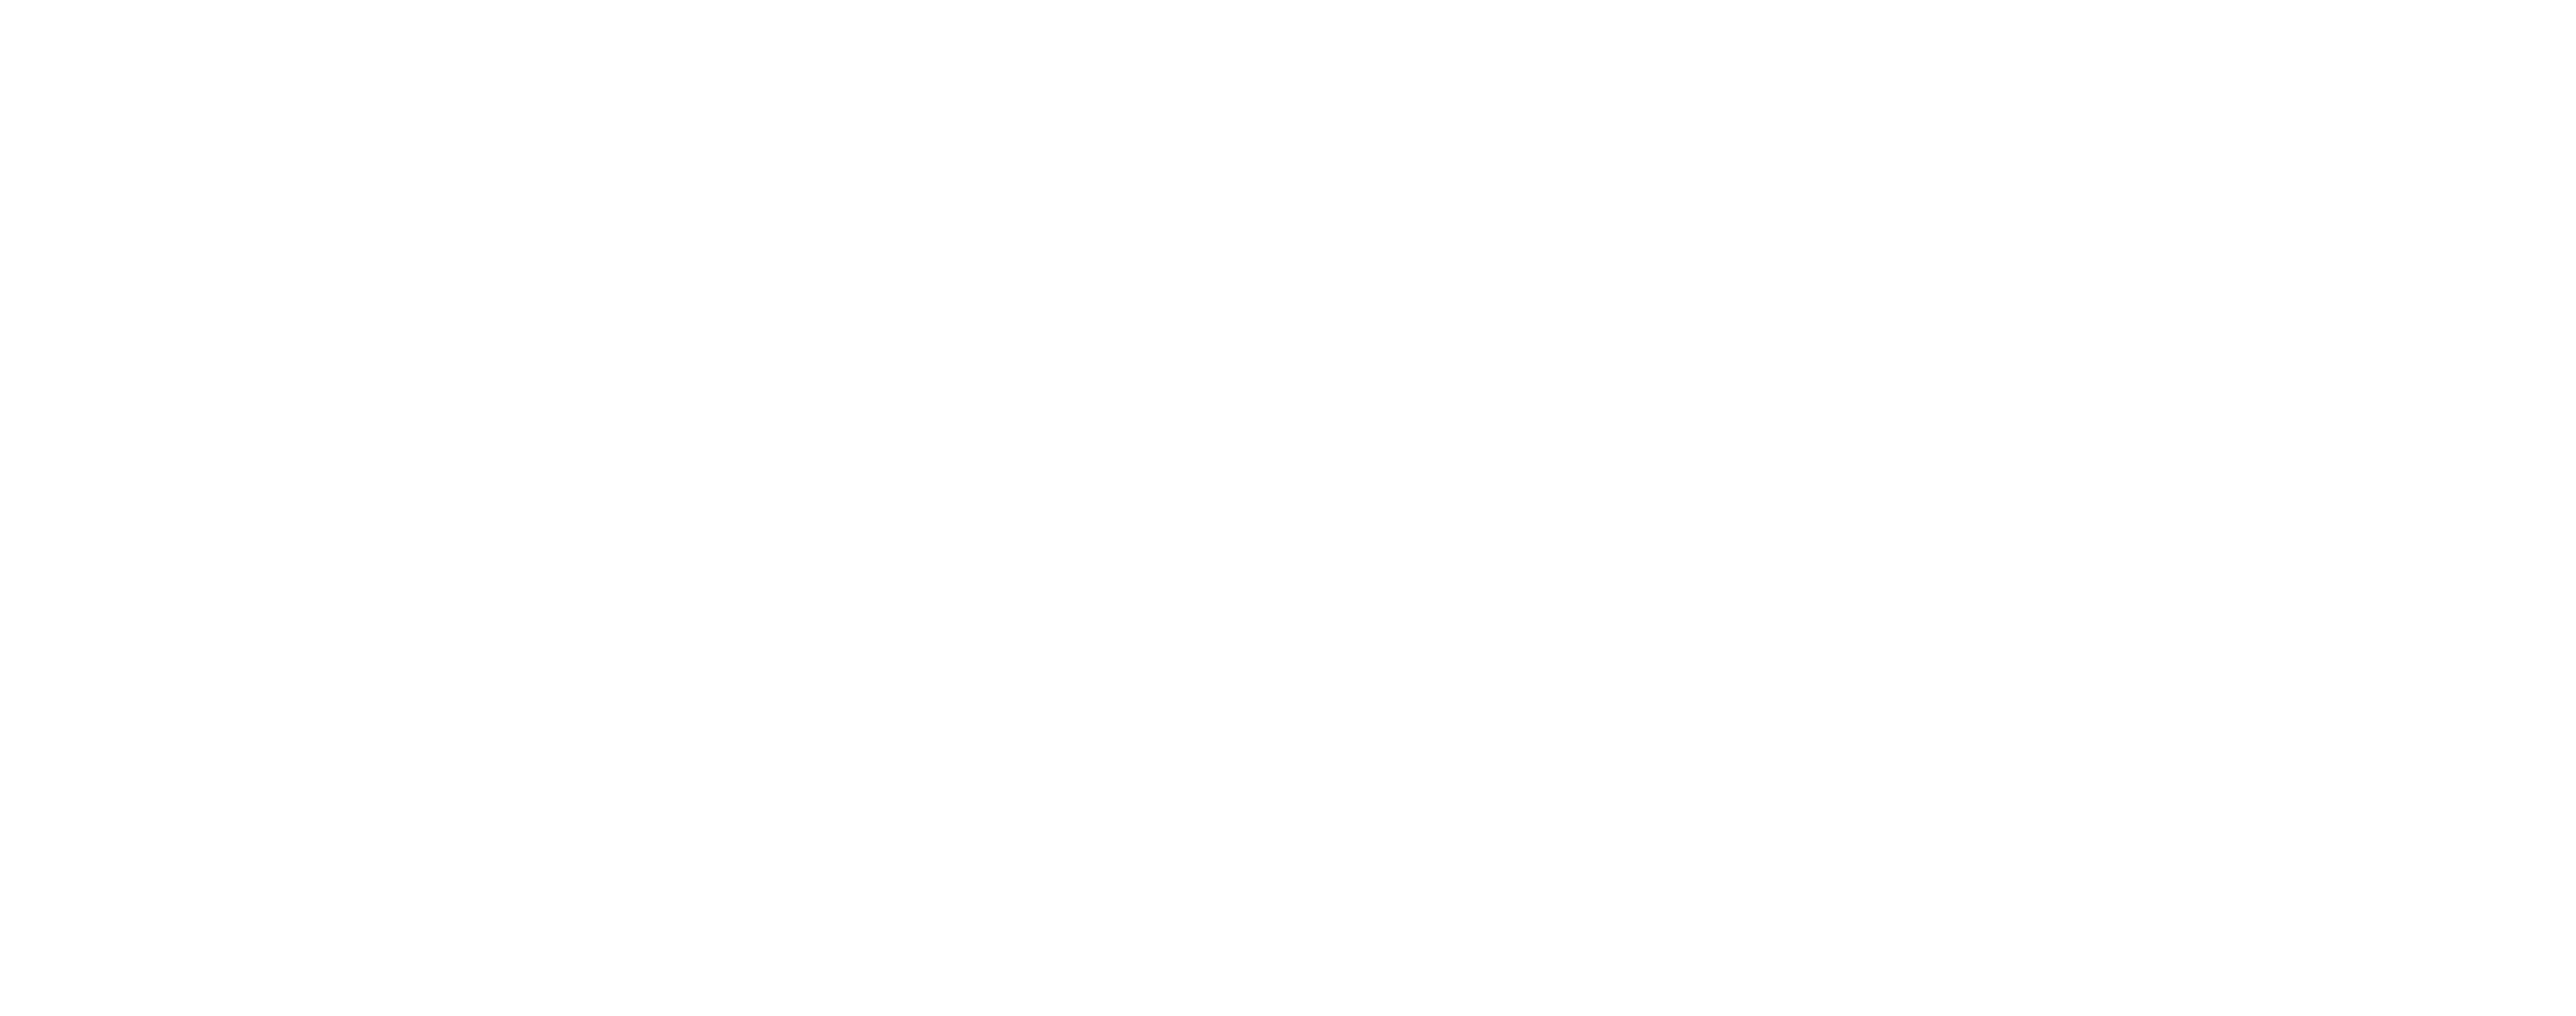 2023 Regional RNDS logo